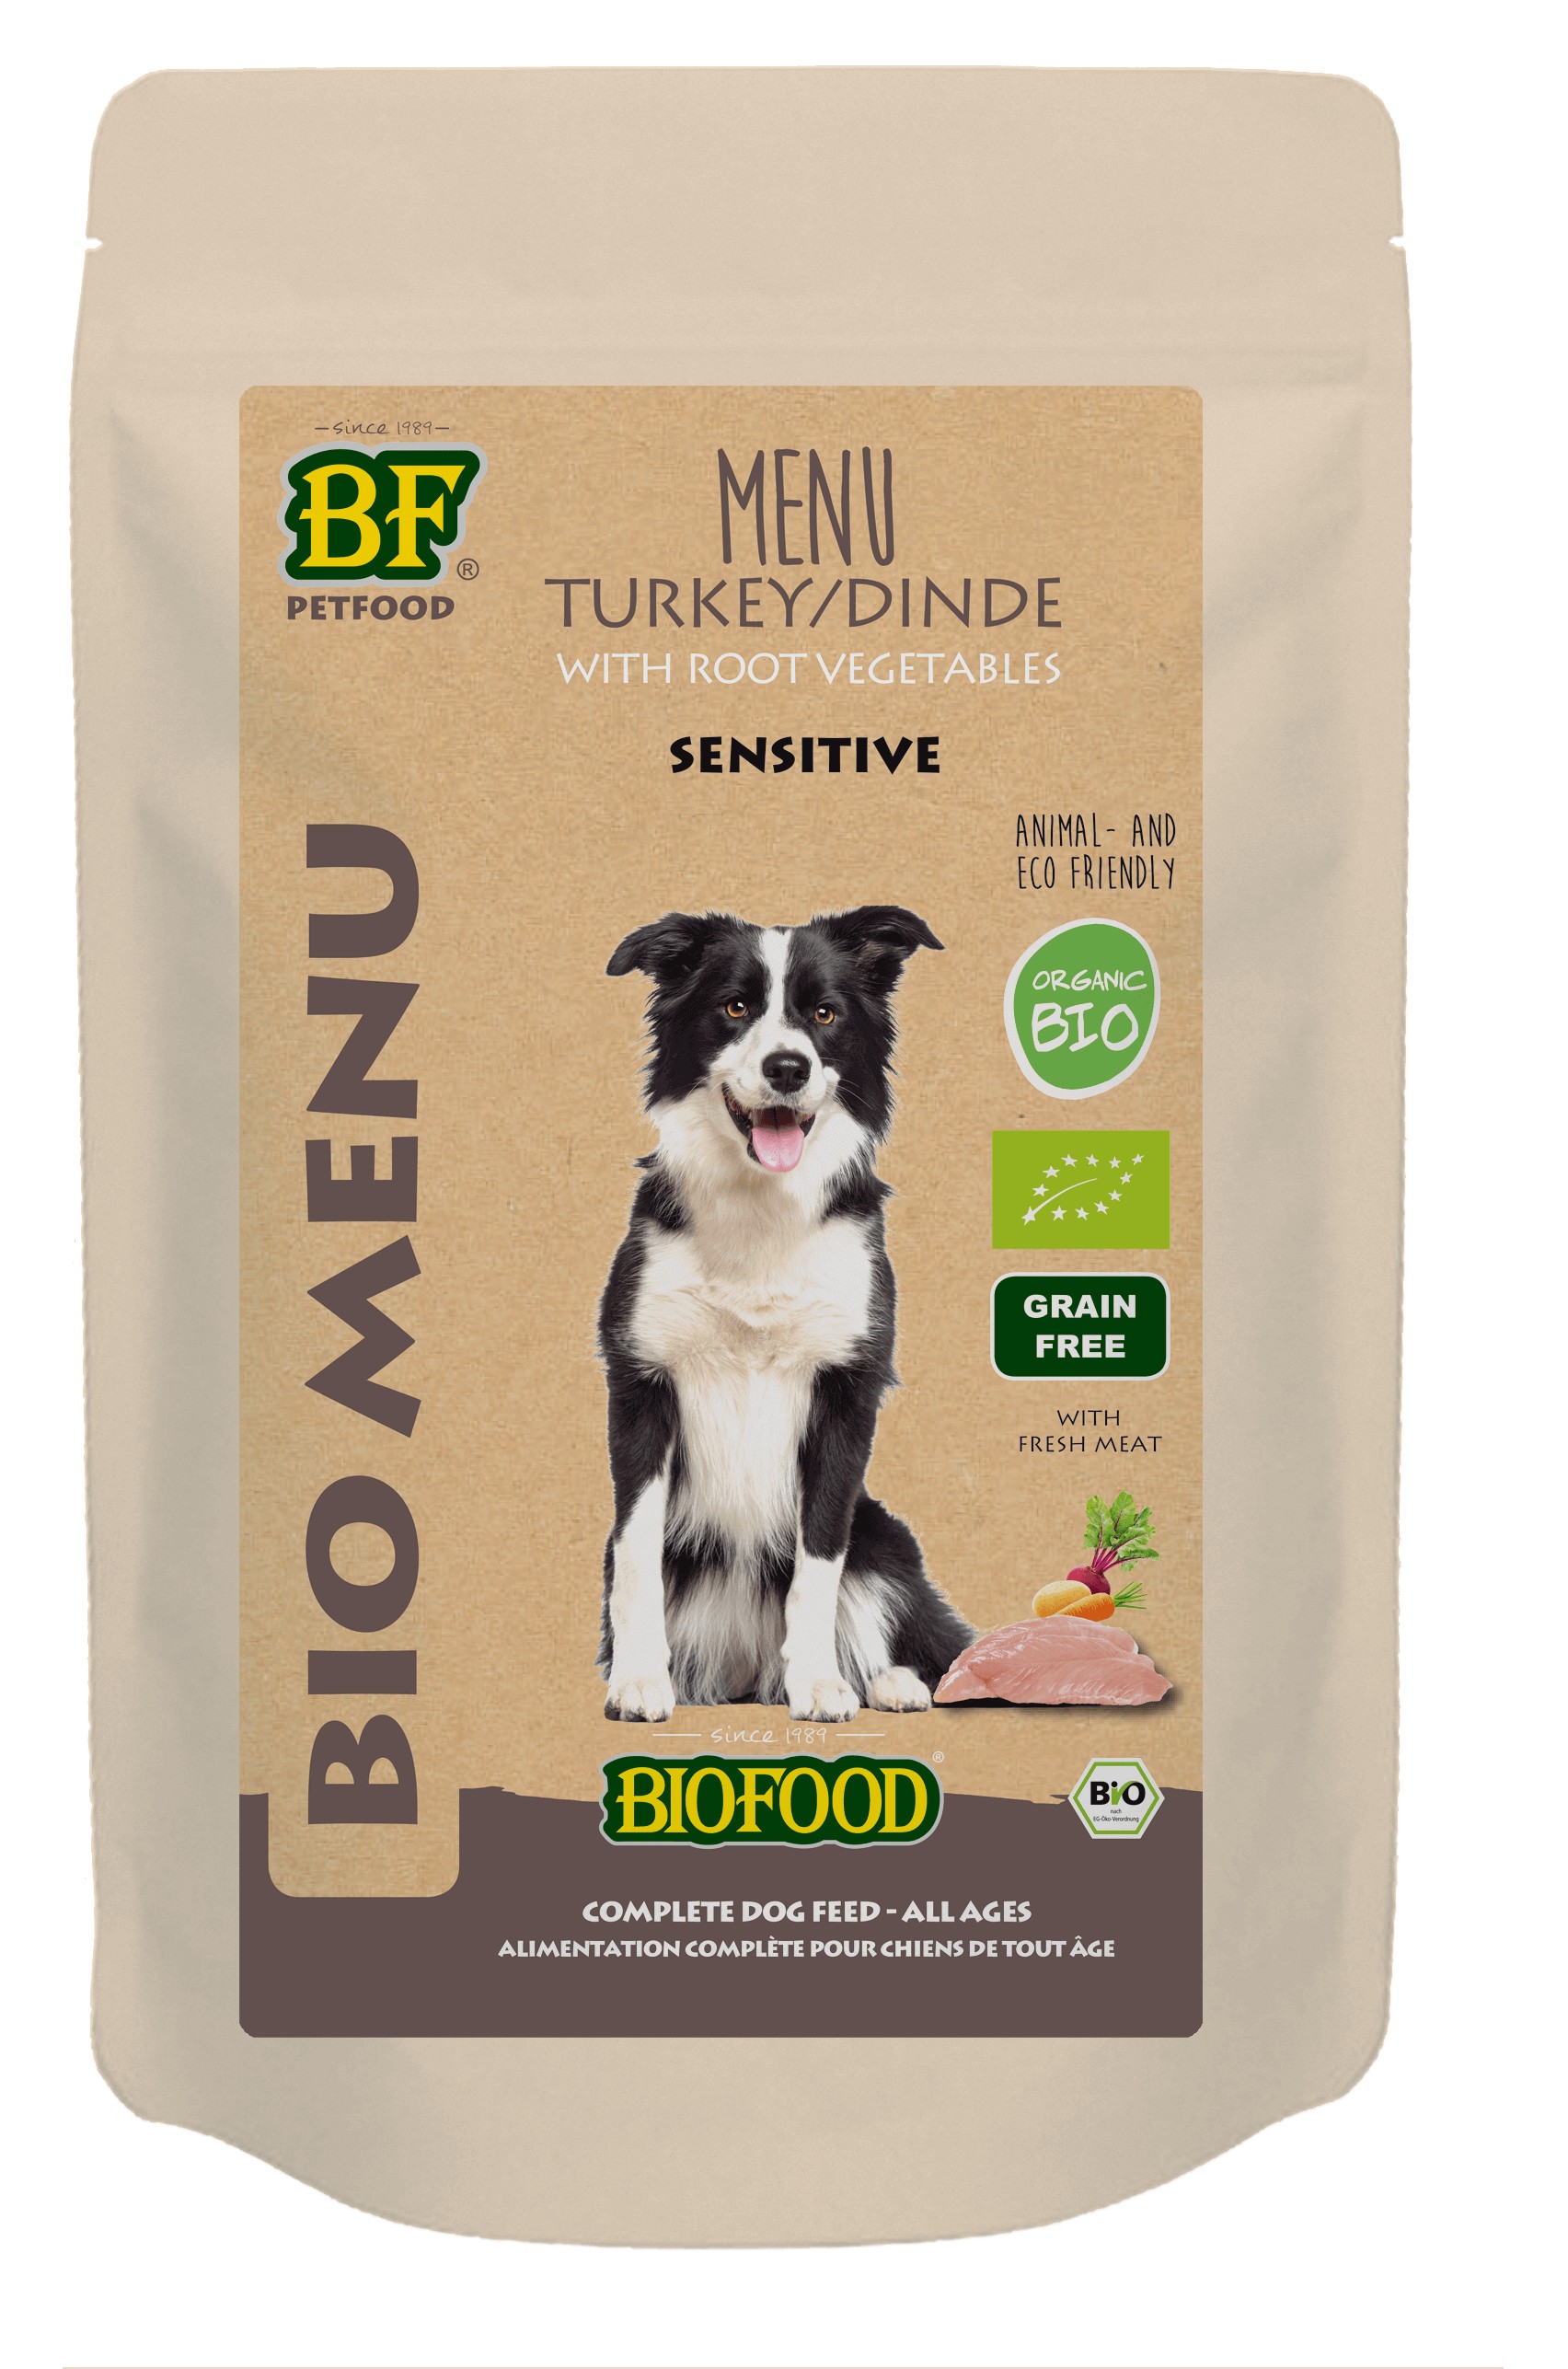 Afbeelding van 15x 150 g BF Petfood Biofood Organic Bio Menu Sensitive kalkoen natvoer hond (150 g)